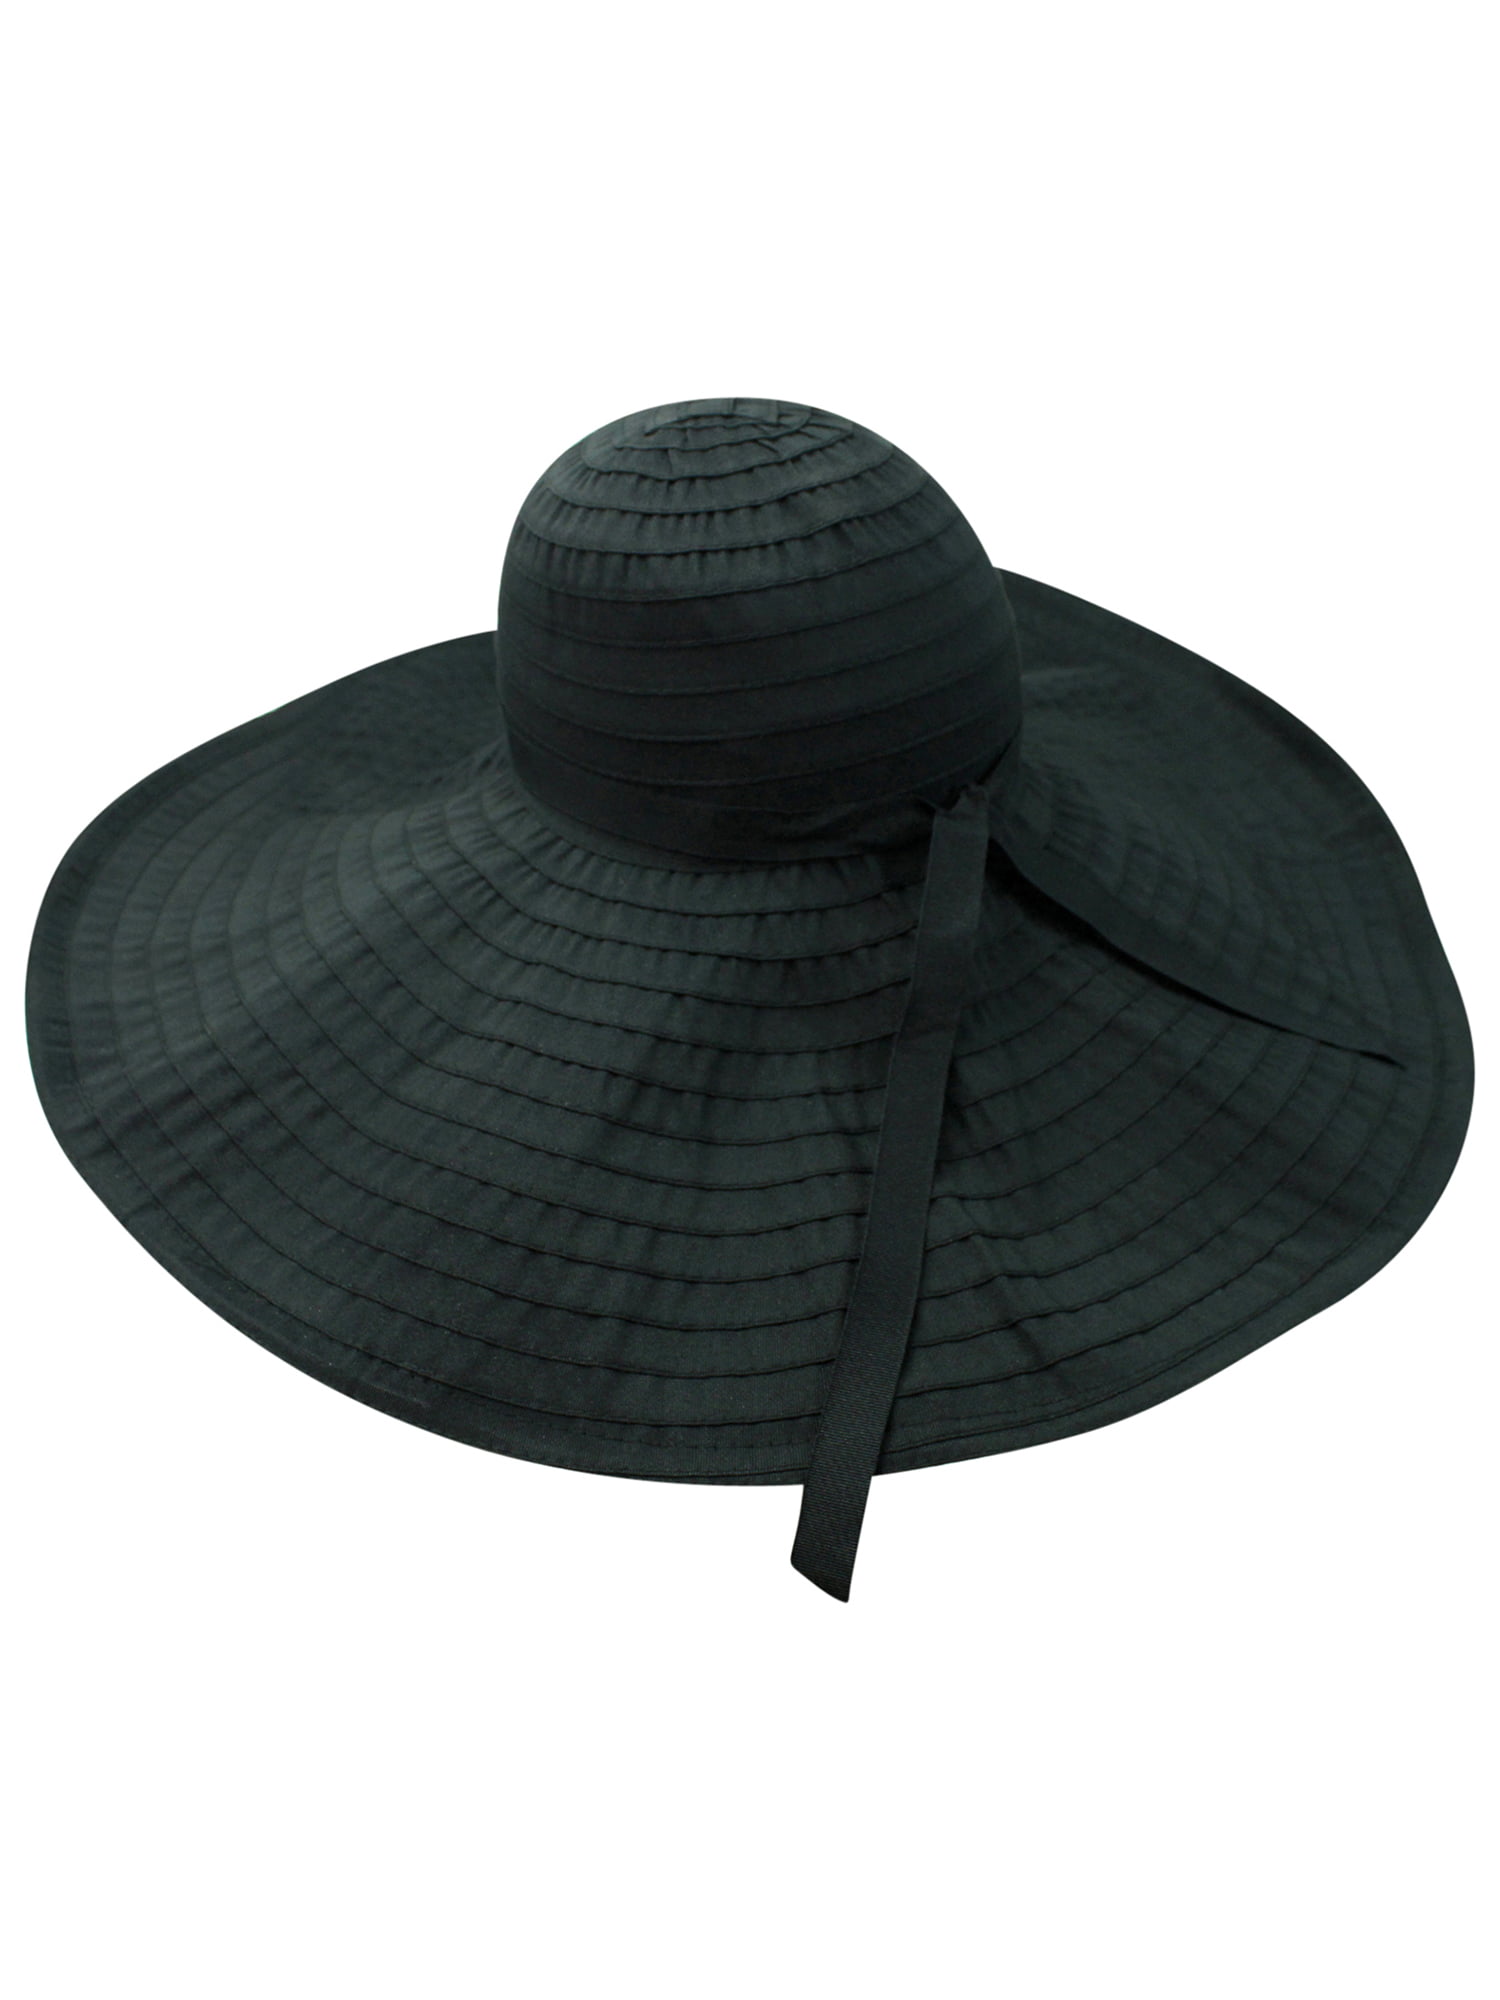 Black Flexible Floppy Hat With Oversized Brim